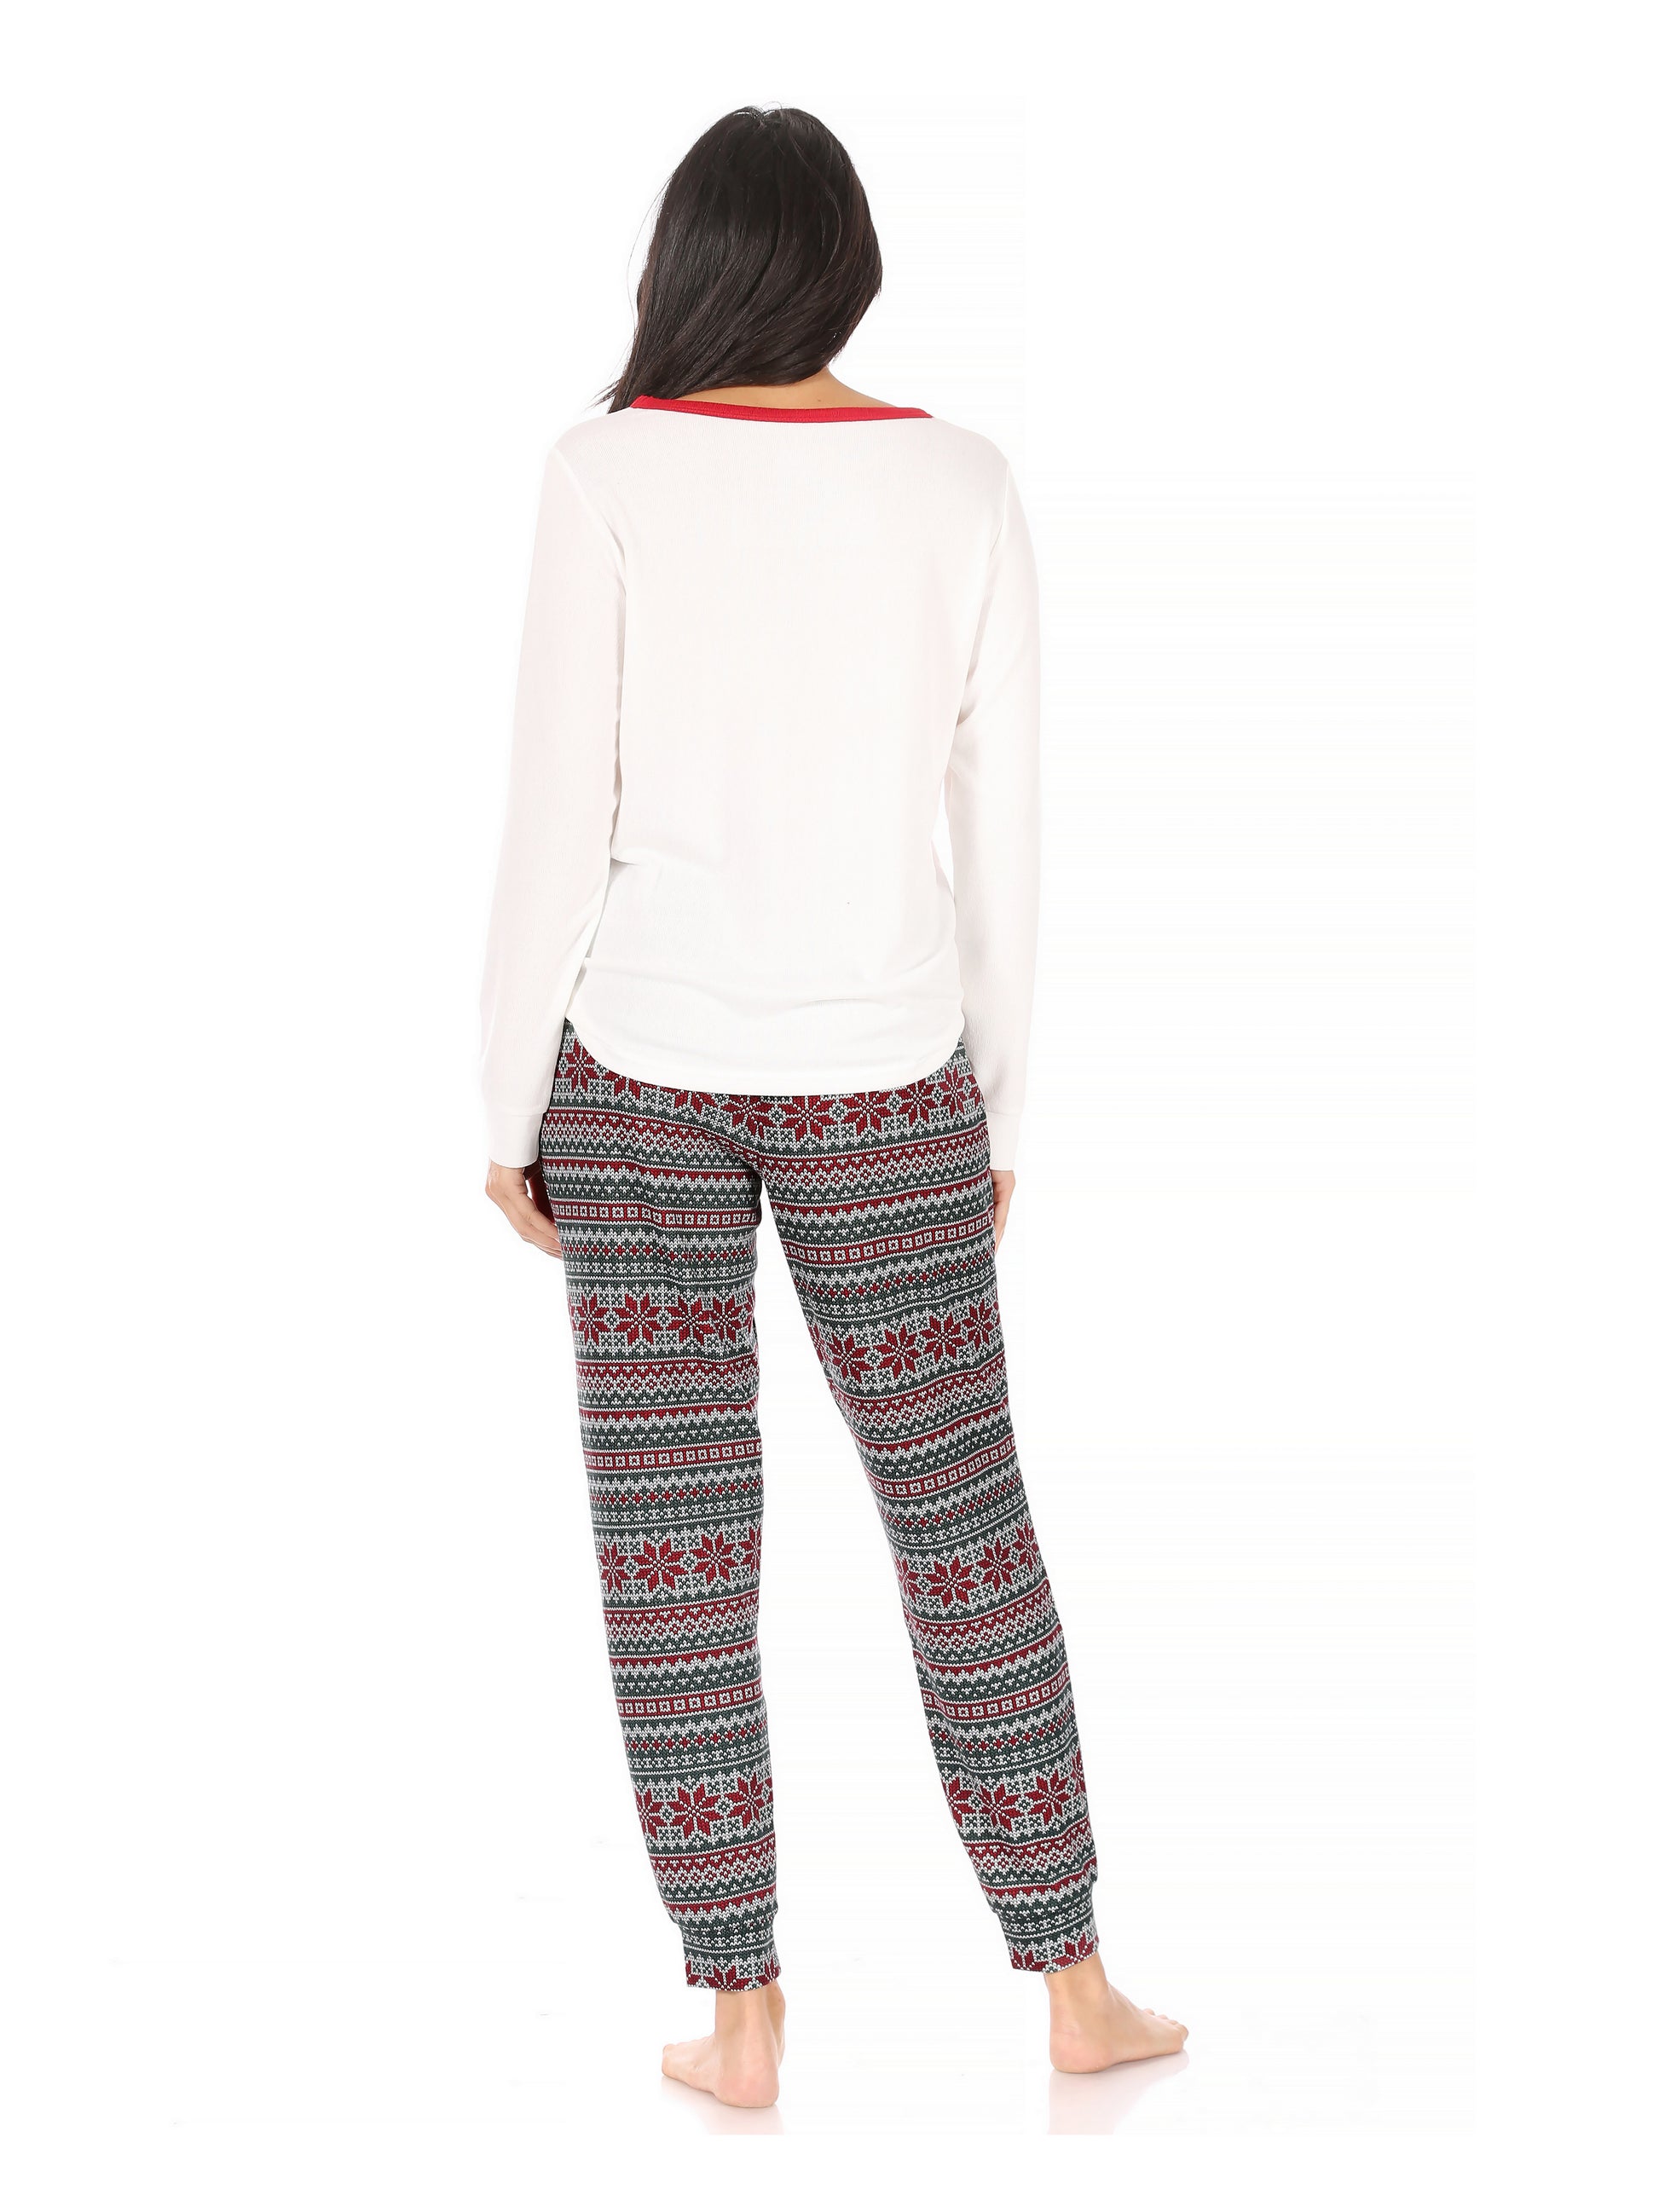 Women's "CHRISTMAS CREW" Long Sleeve Top and Jogger Pajama Set - Rae Dunn Wear - W Pants Set